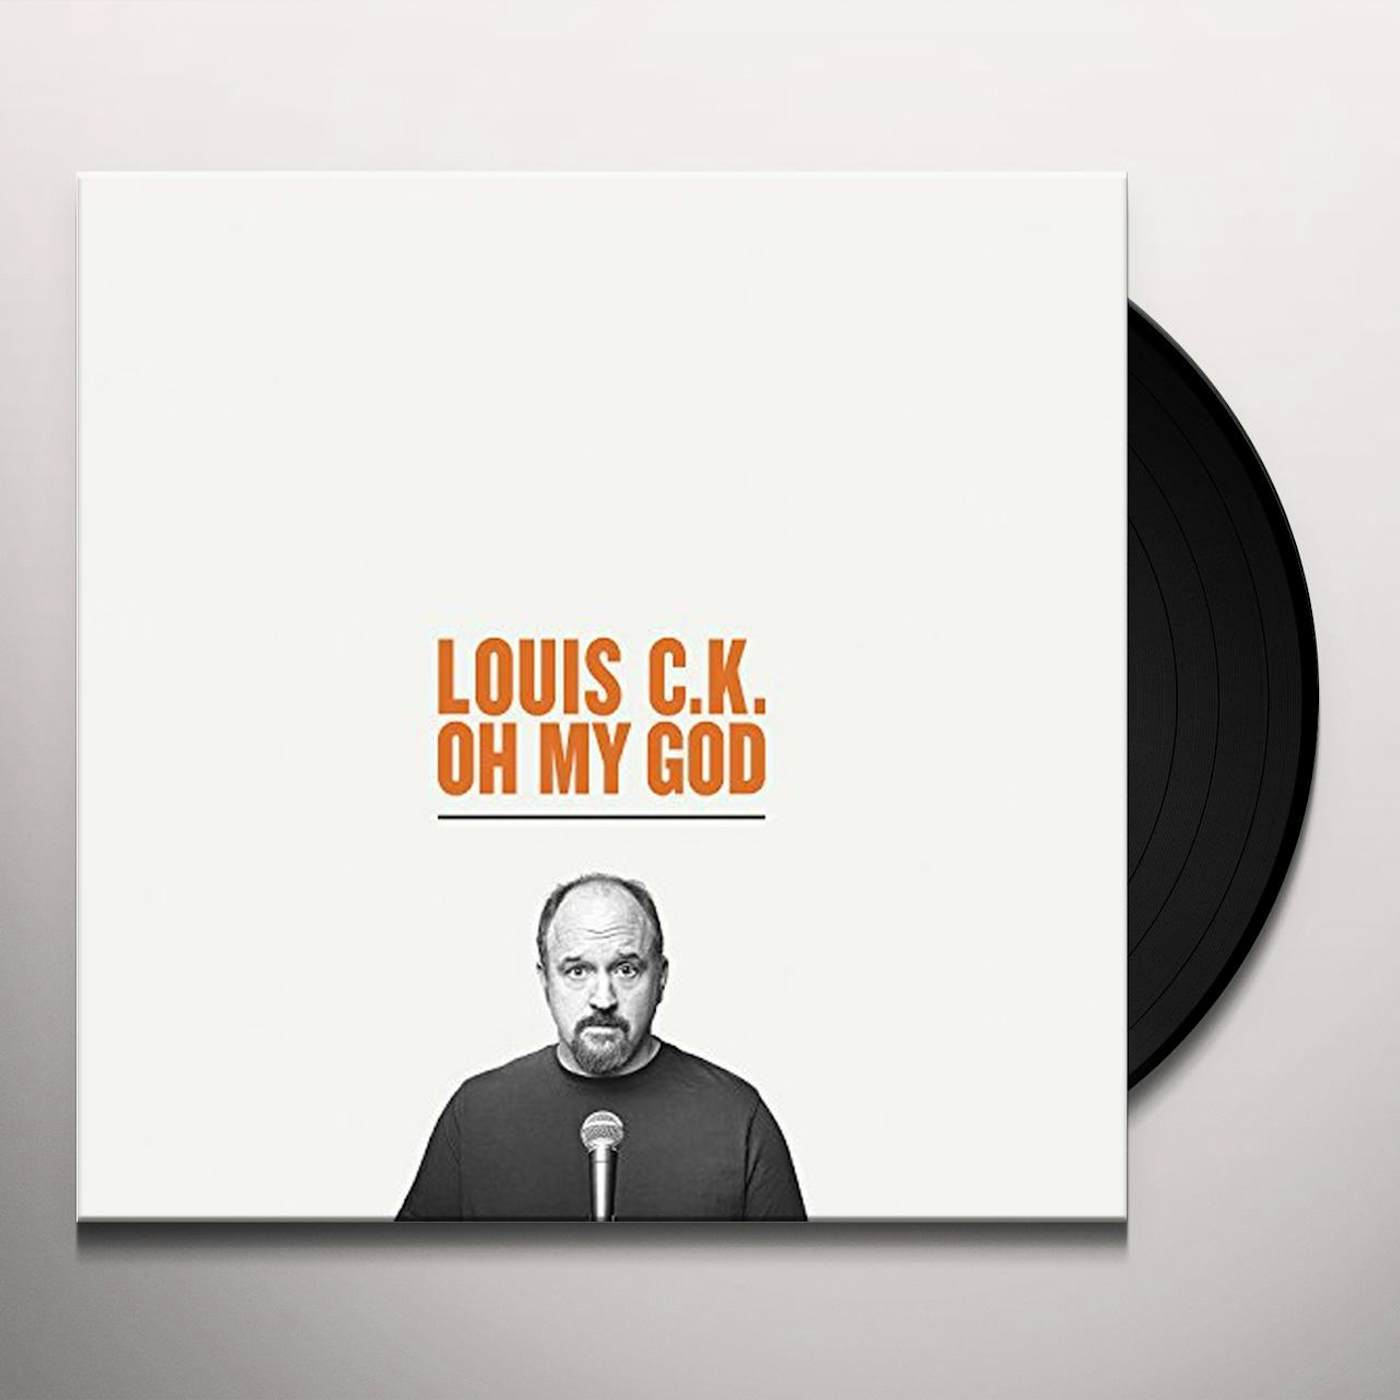 Oh My God Vinyl Record - LOUIS CK